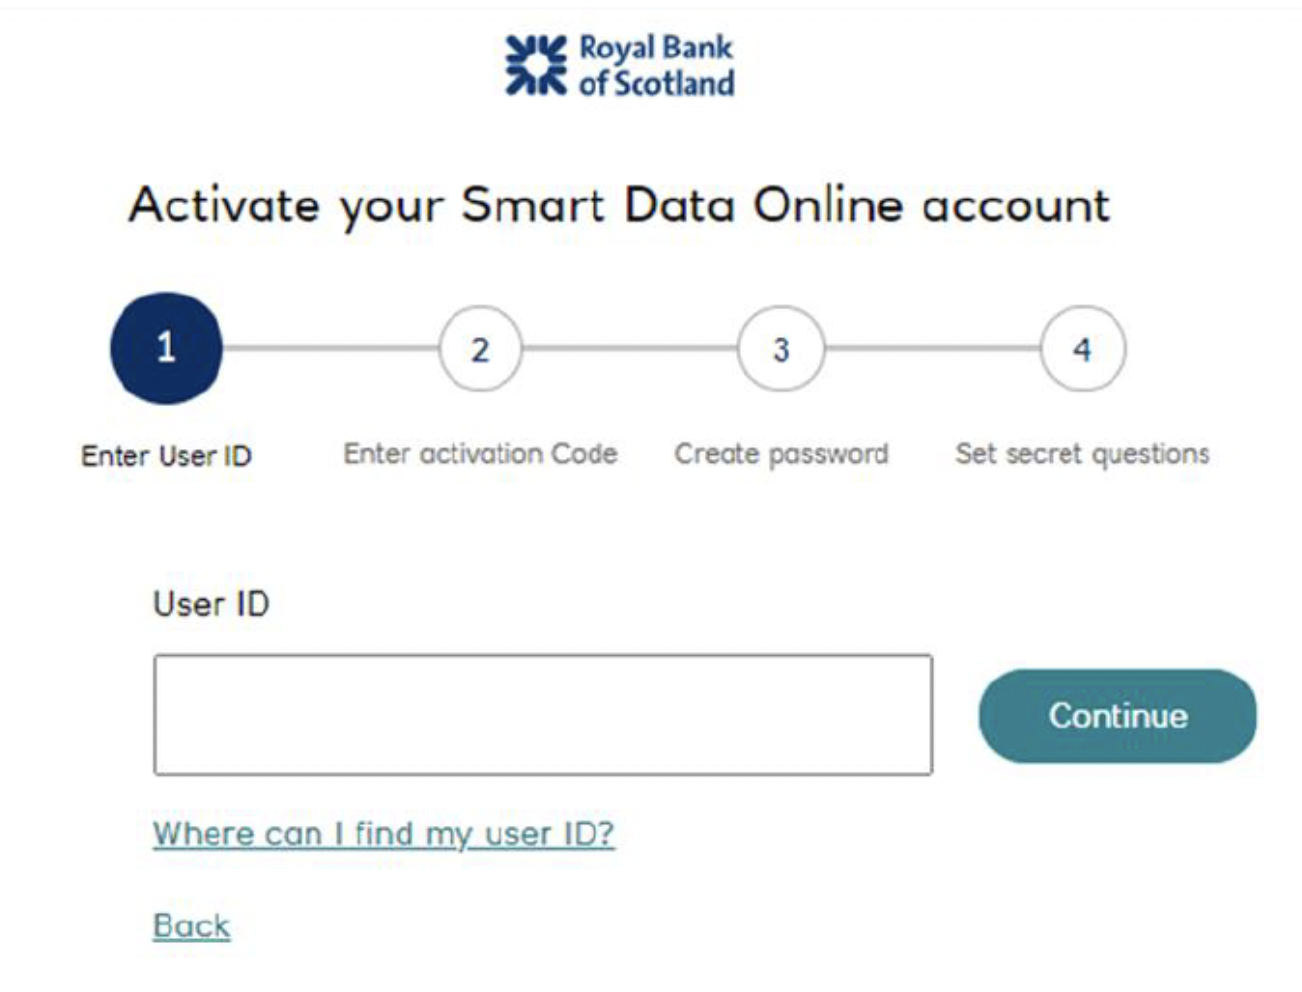 RBS Smart Data Online account activation screen’